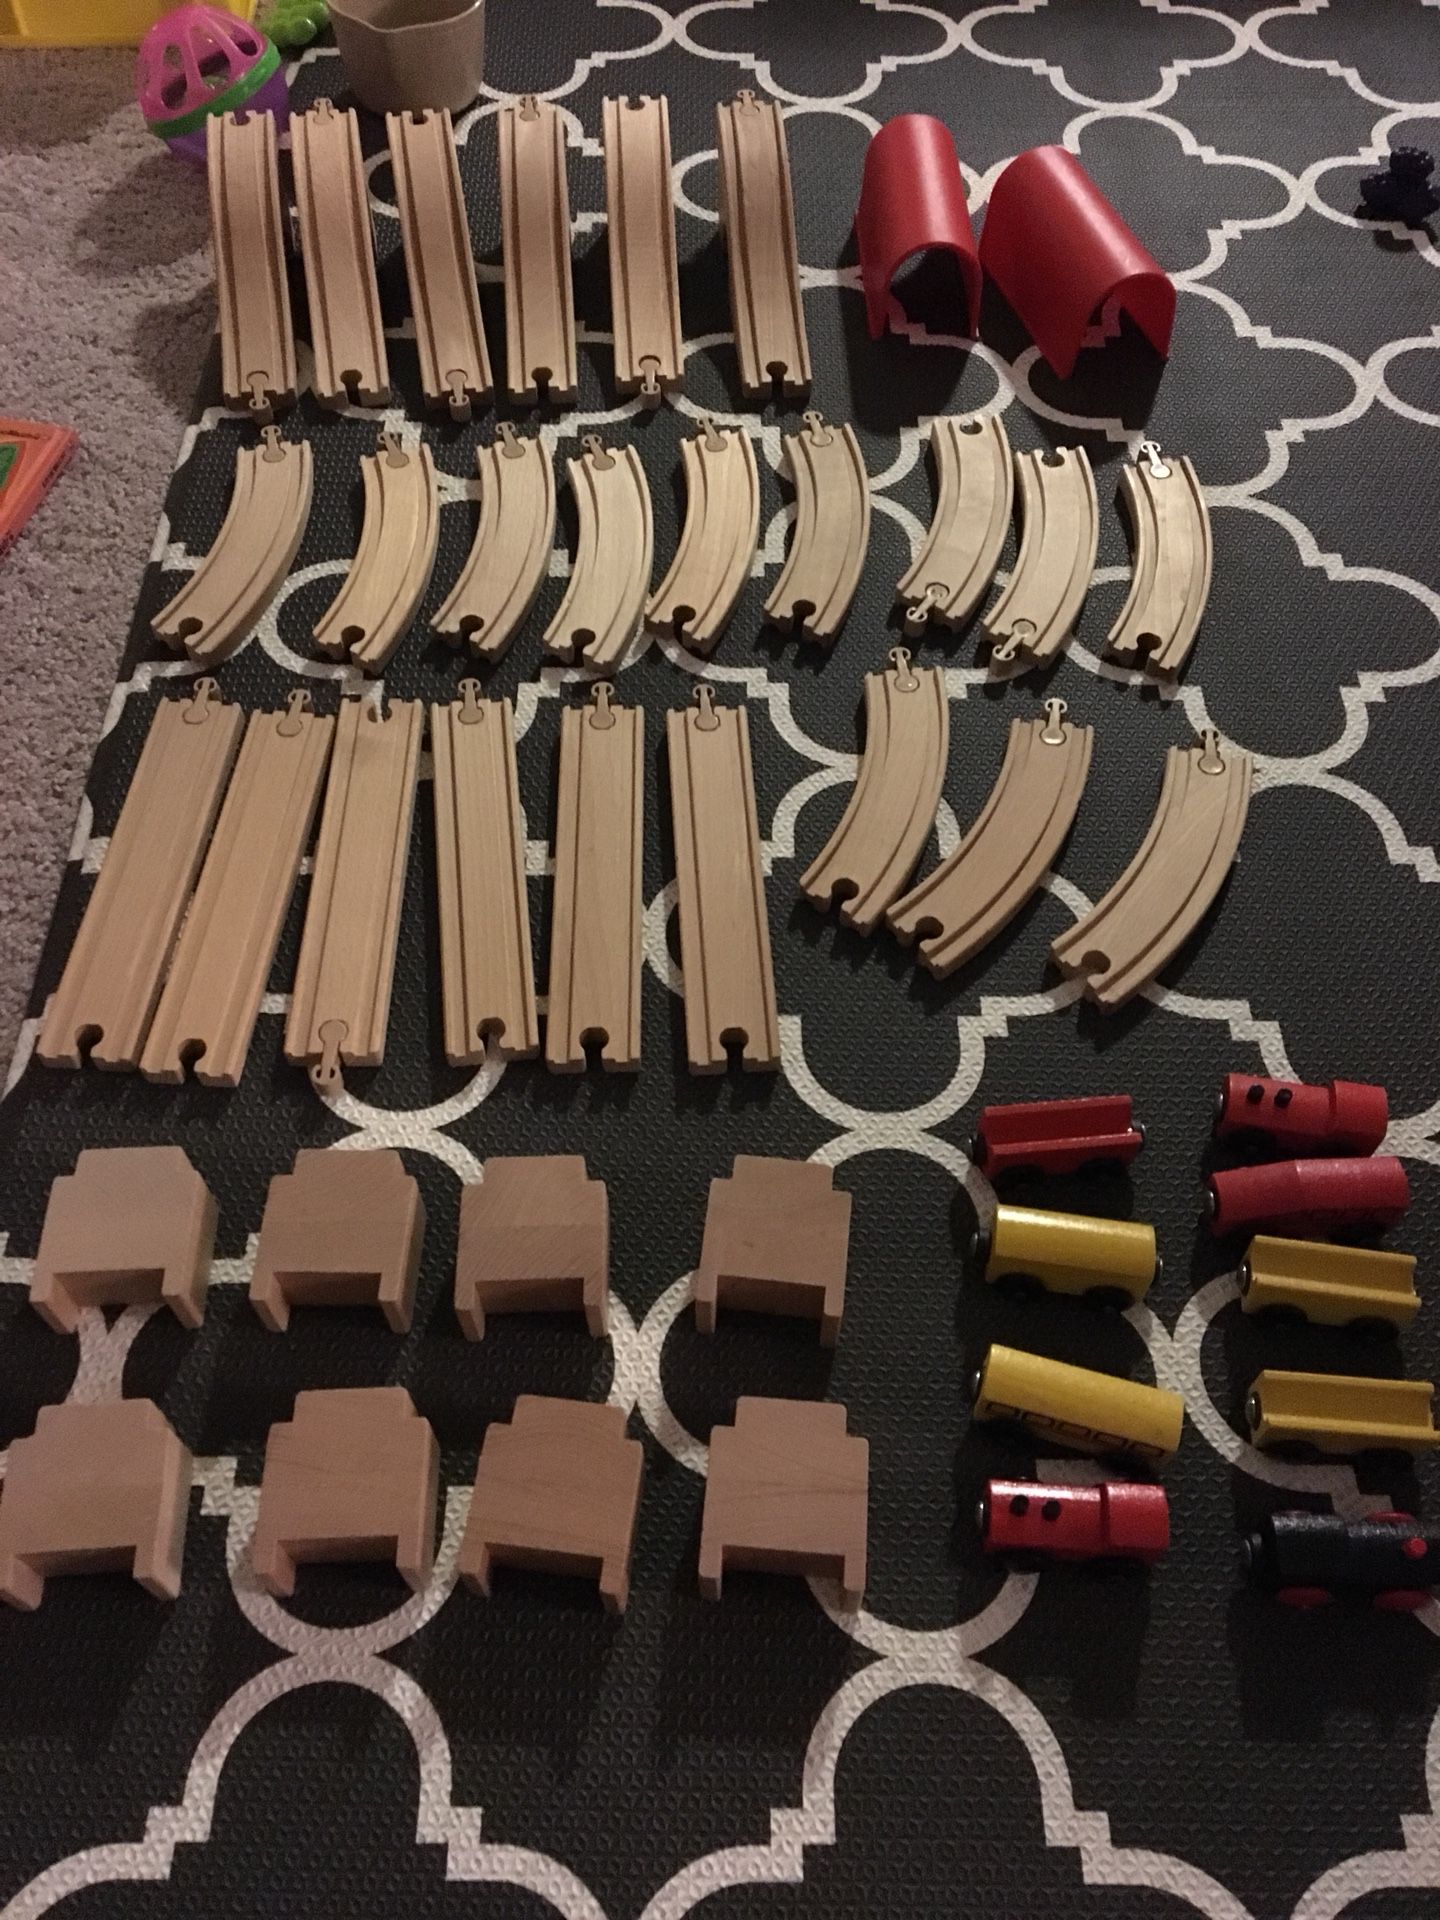 Ikea wood train play set all for $10